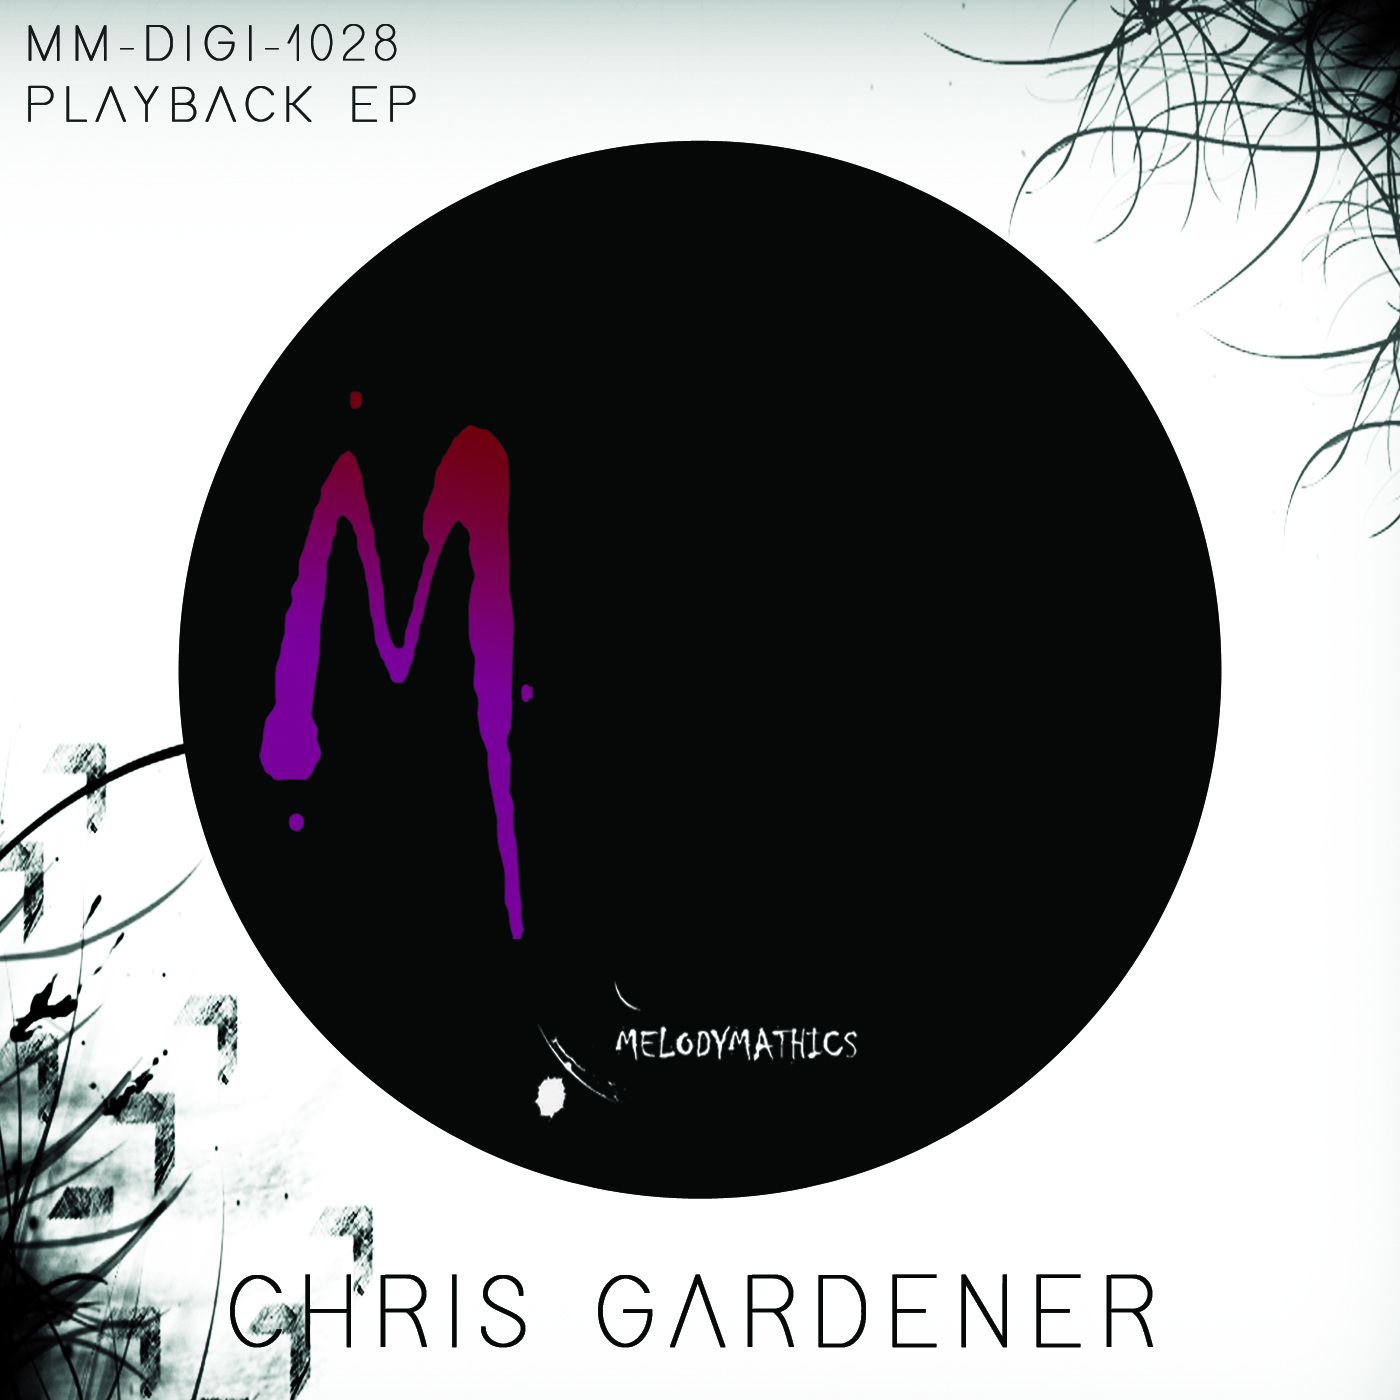 Chris Gardener - Playback EP / Melodymathics